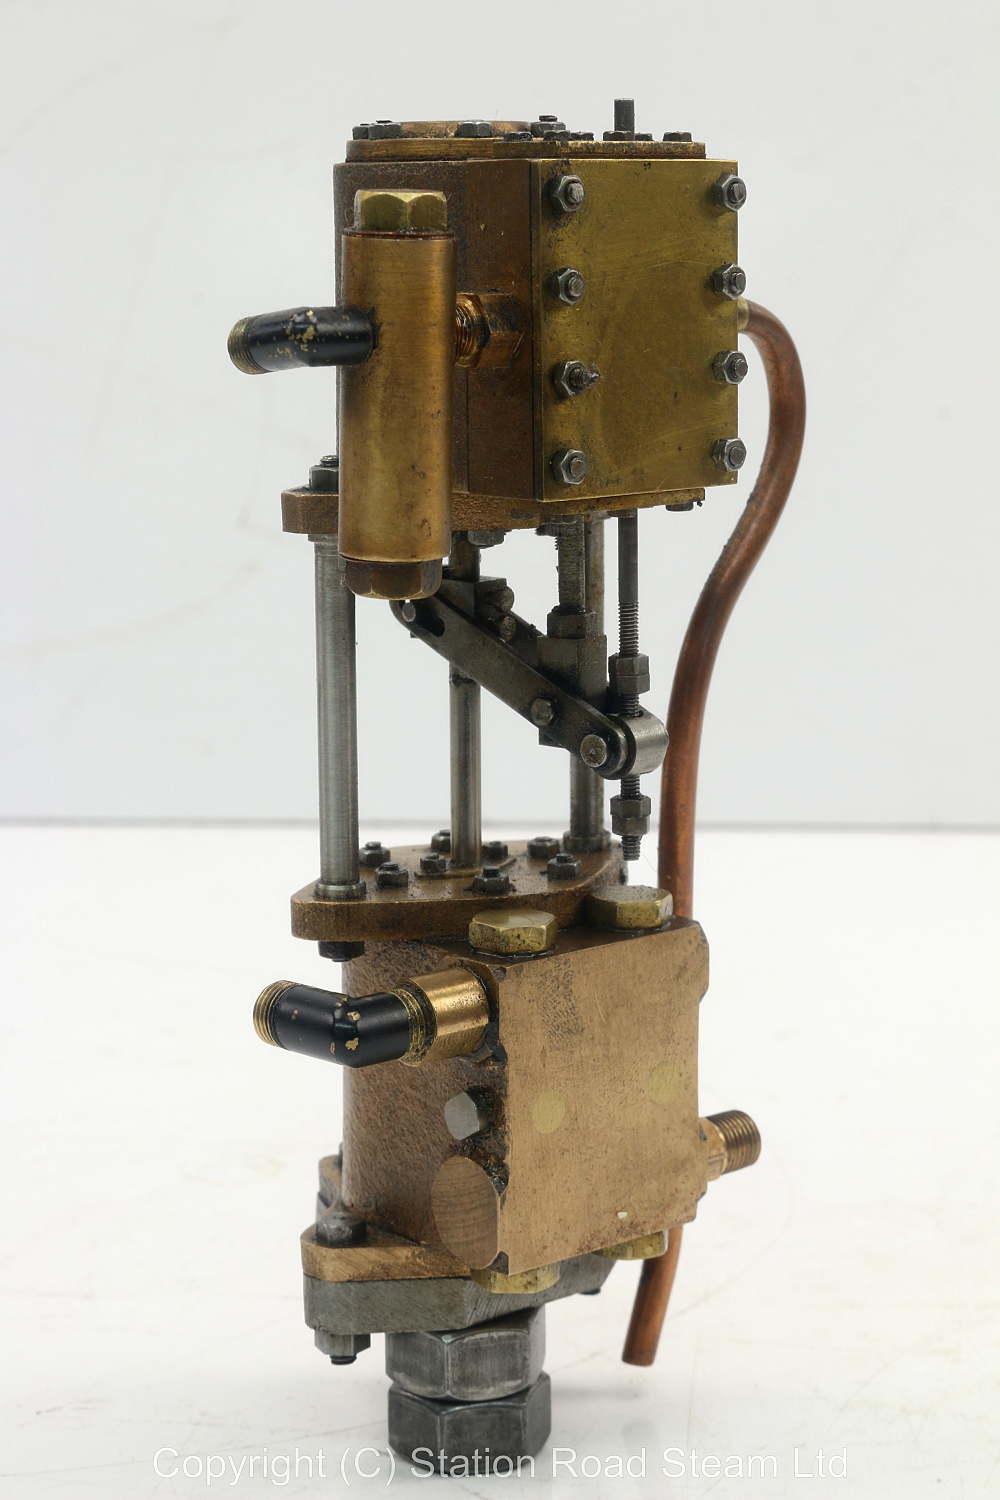 6 inch Southworth steam pump